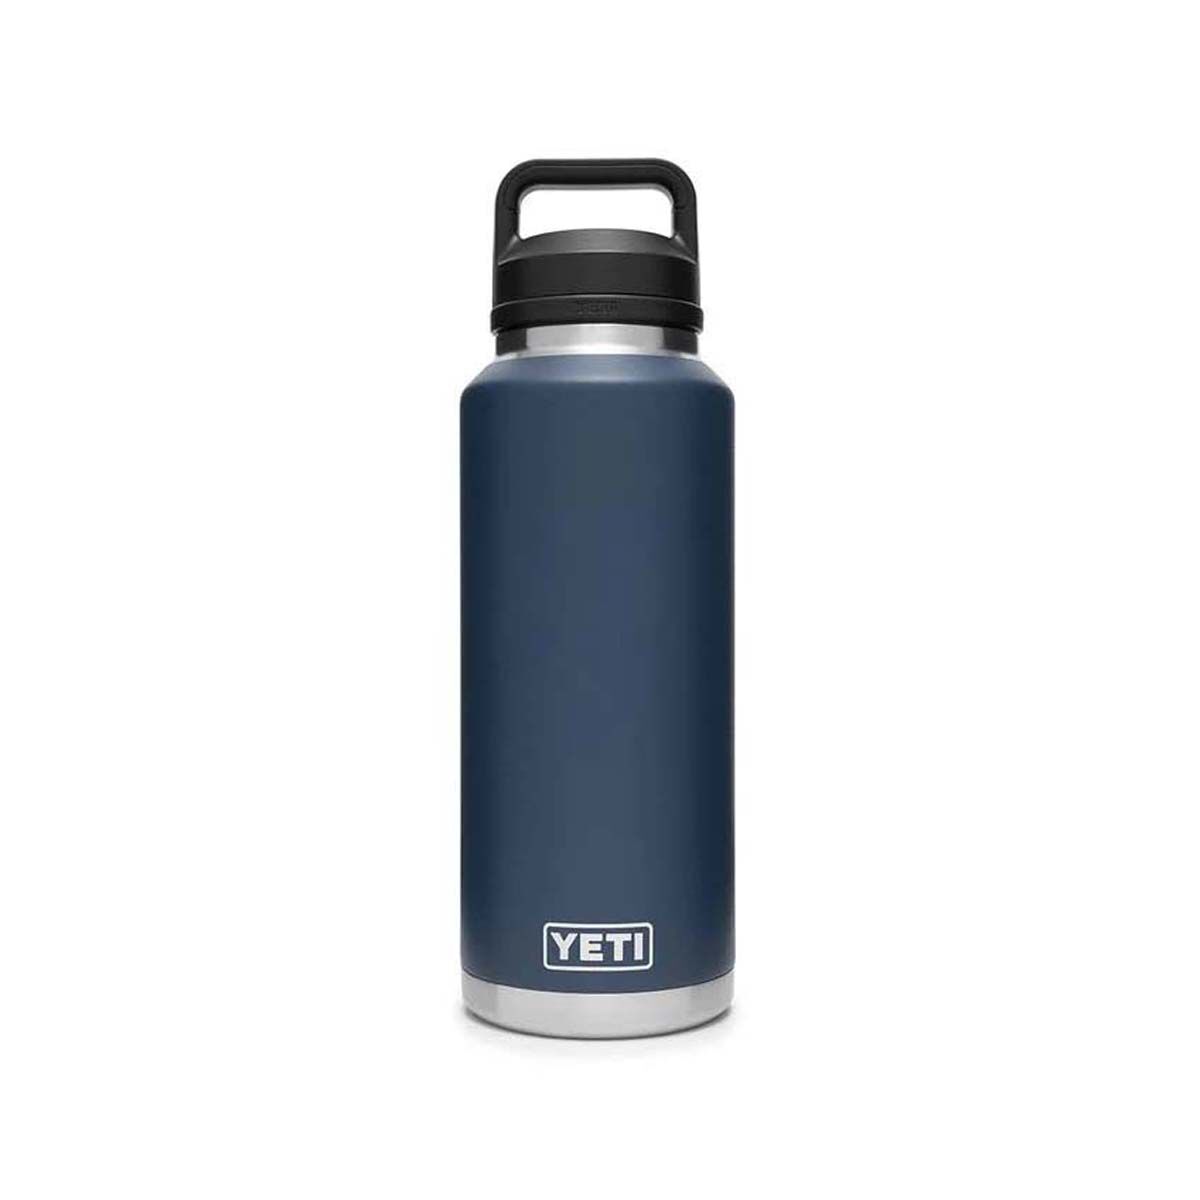 YETI: Its Here: The New Rambler 46 oz. Bottle